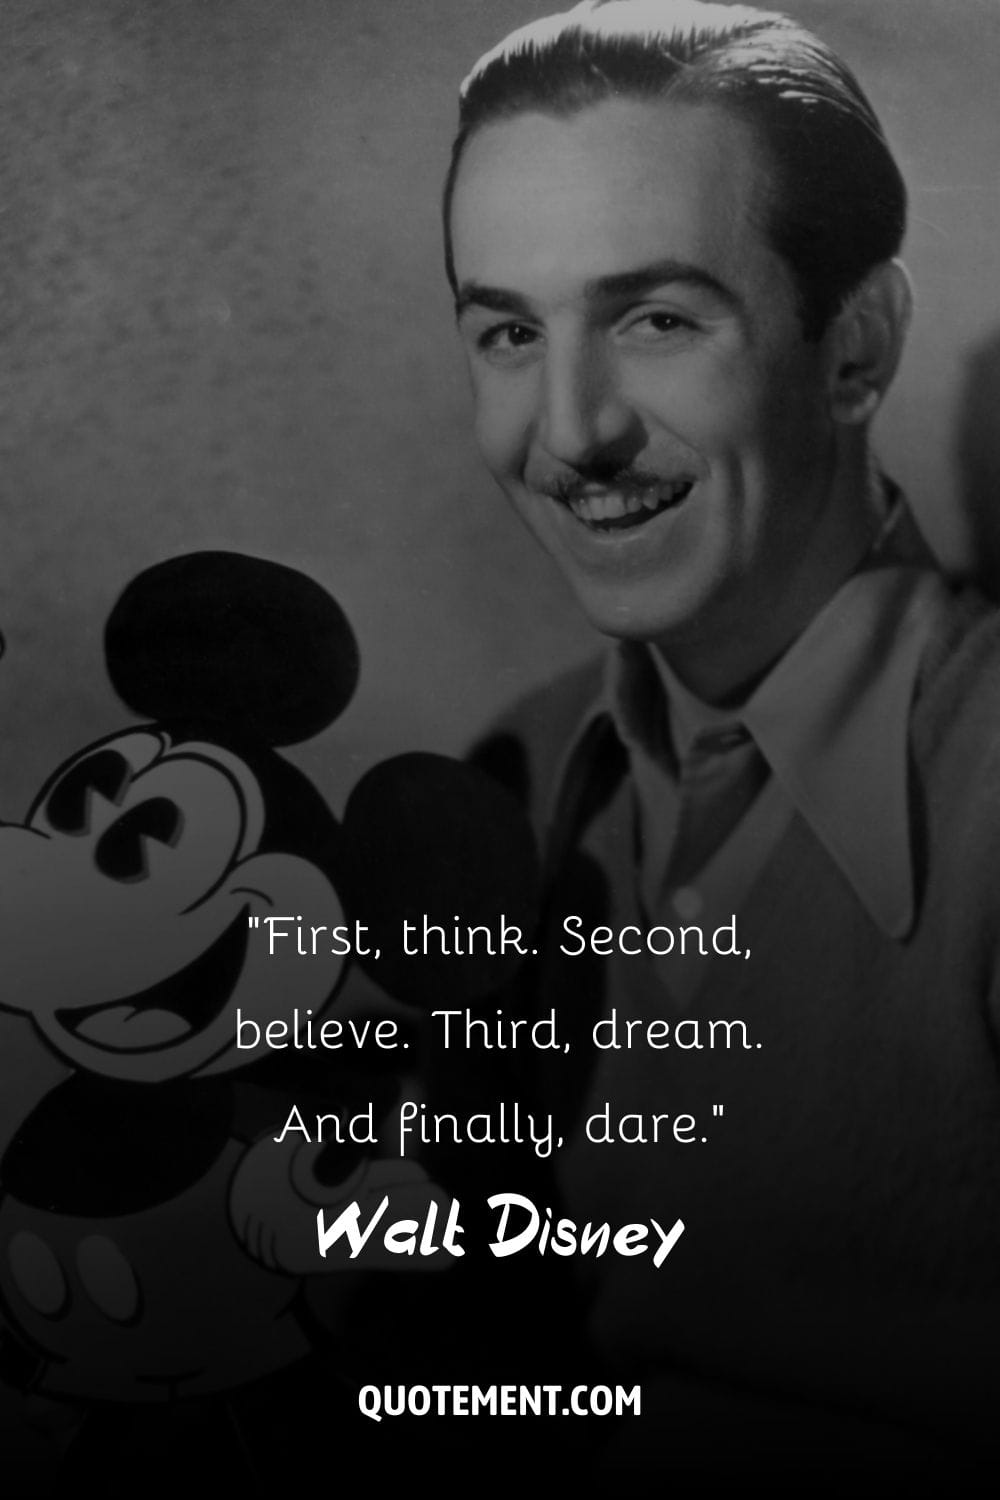 Image of Walt Disney representing the best Walt Disney quote.